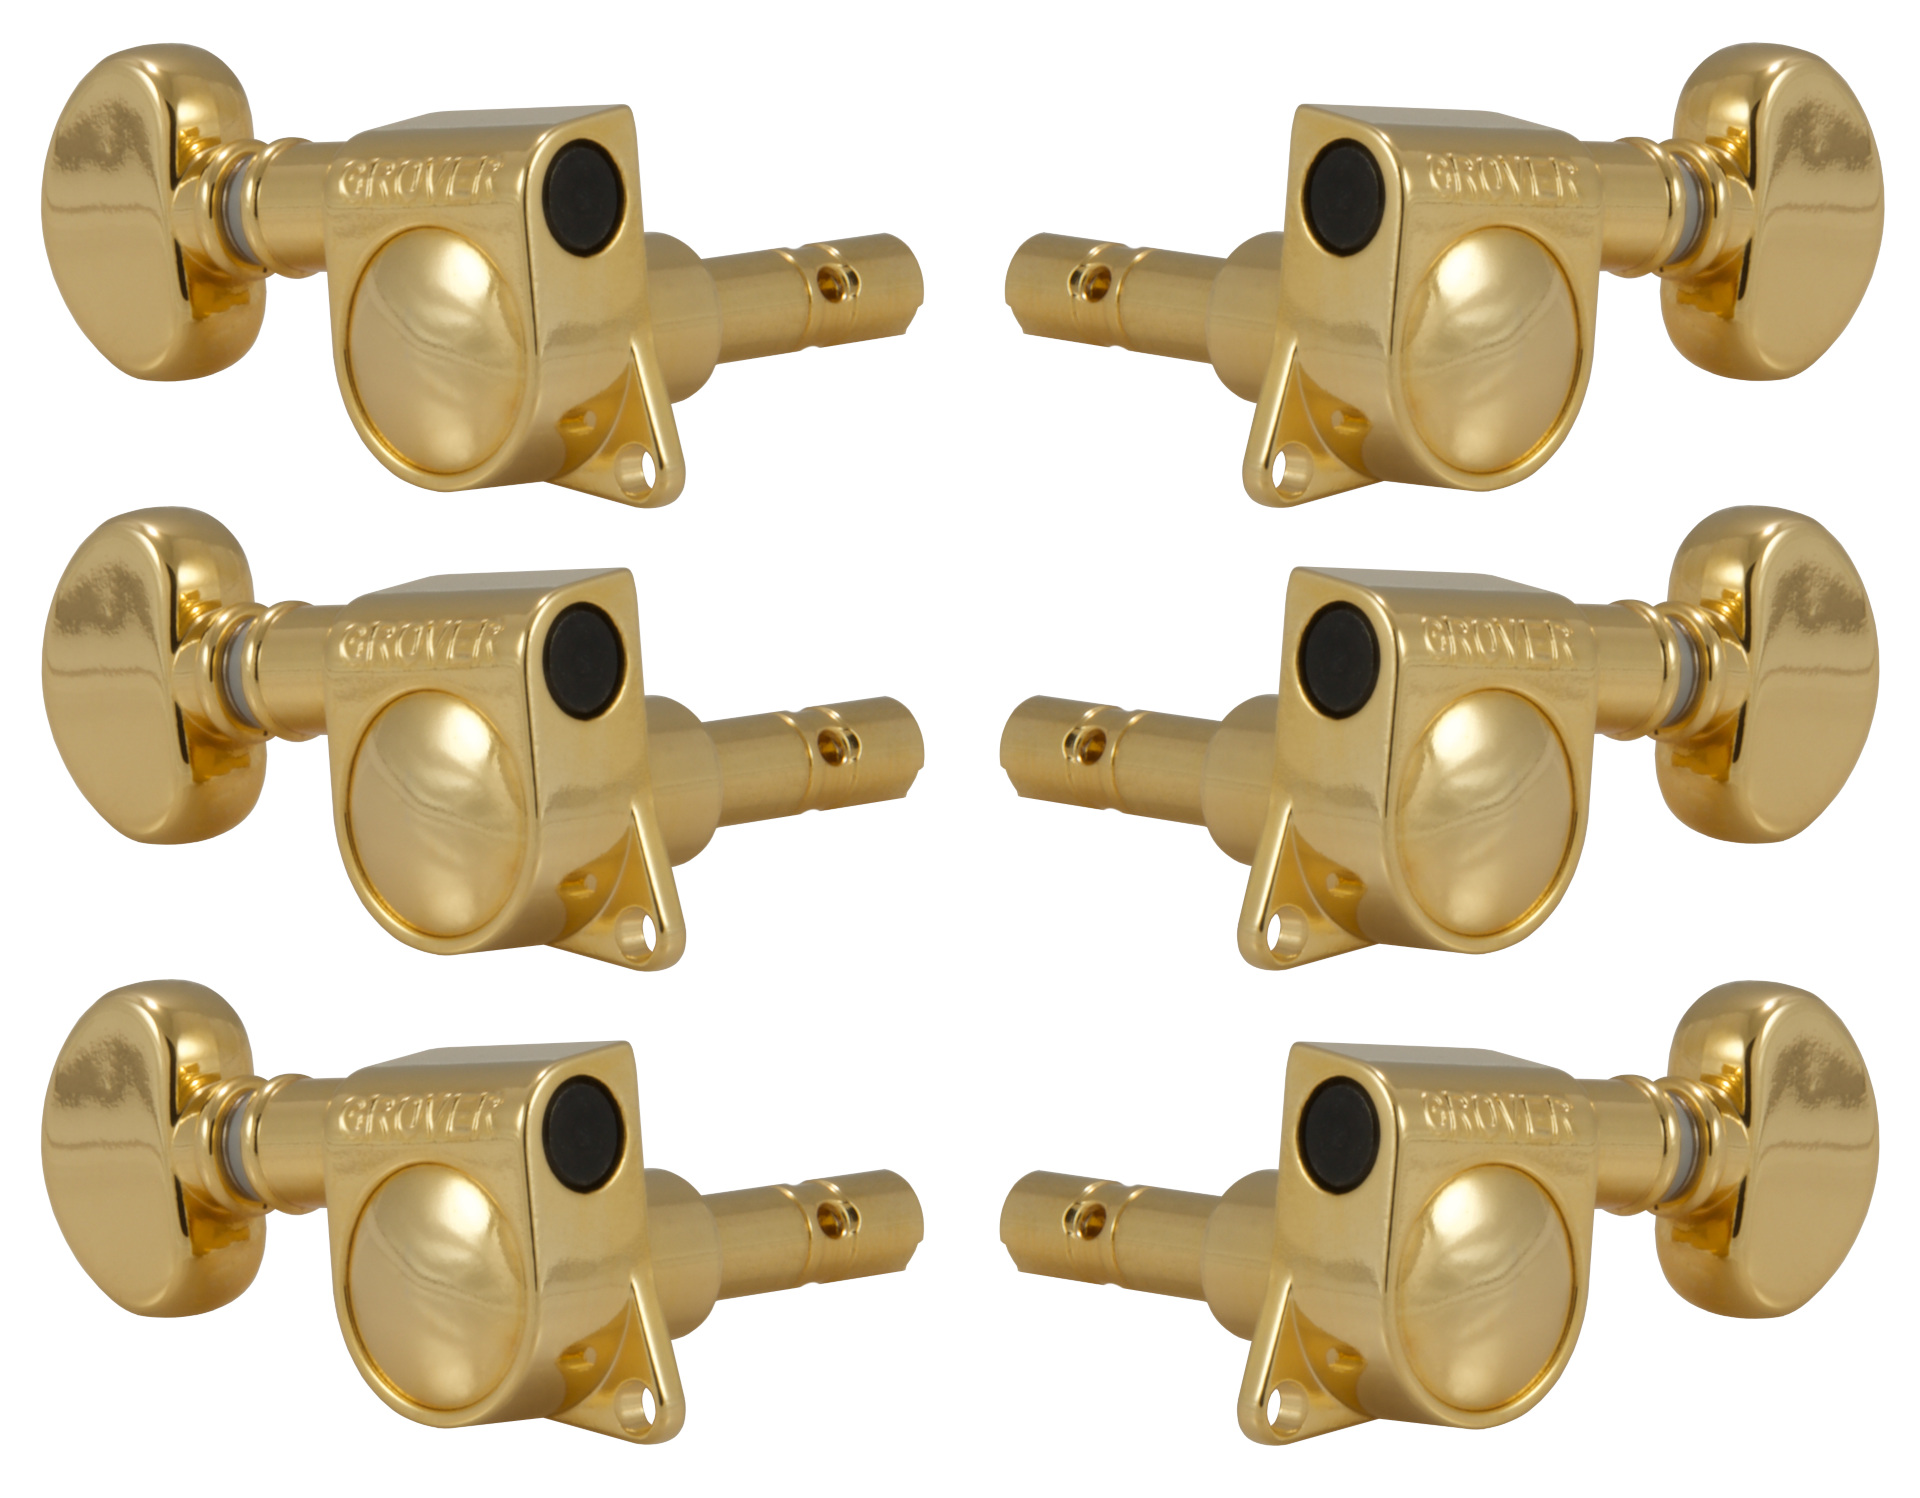 Grover 406G Mini Locking Rotomatics with Round Button - Guitar Machine Heads, 3 + 3 - Gold